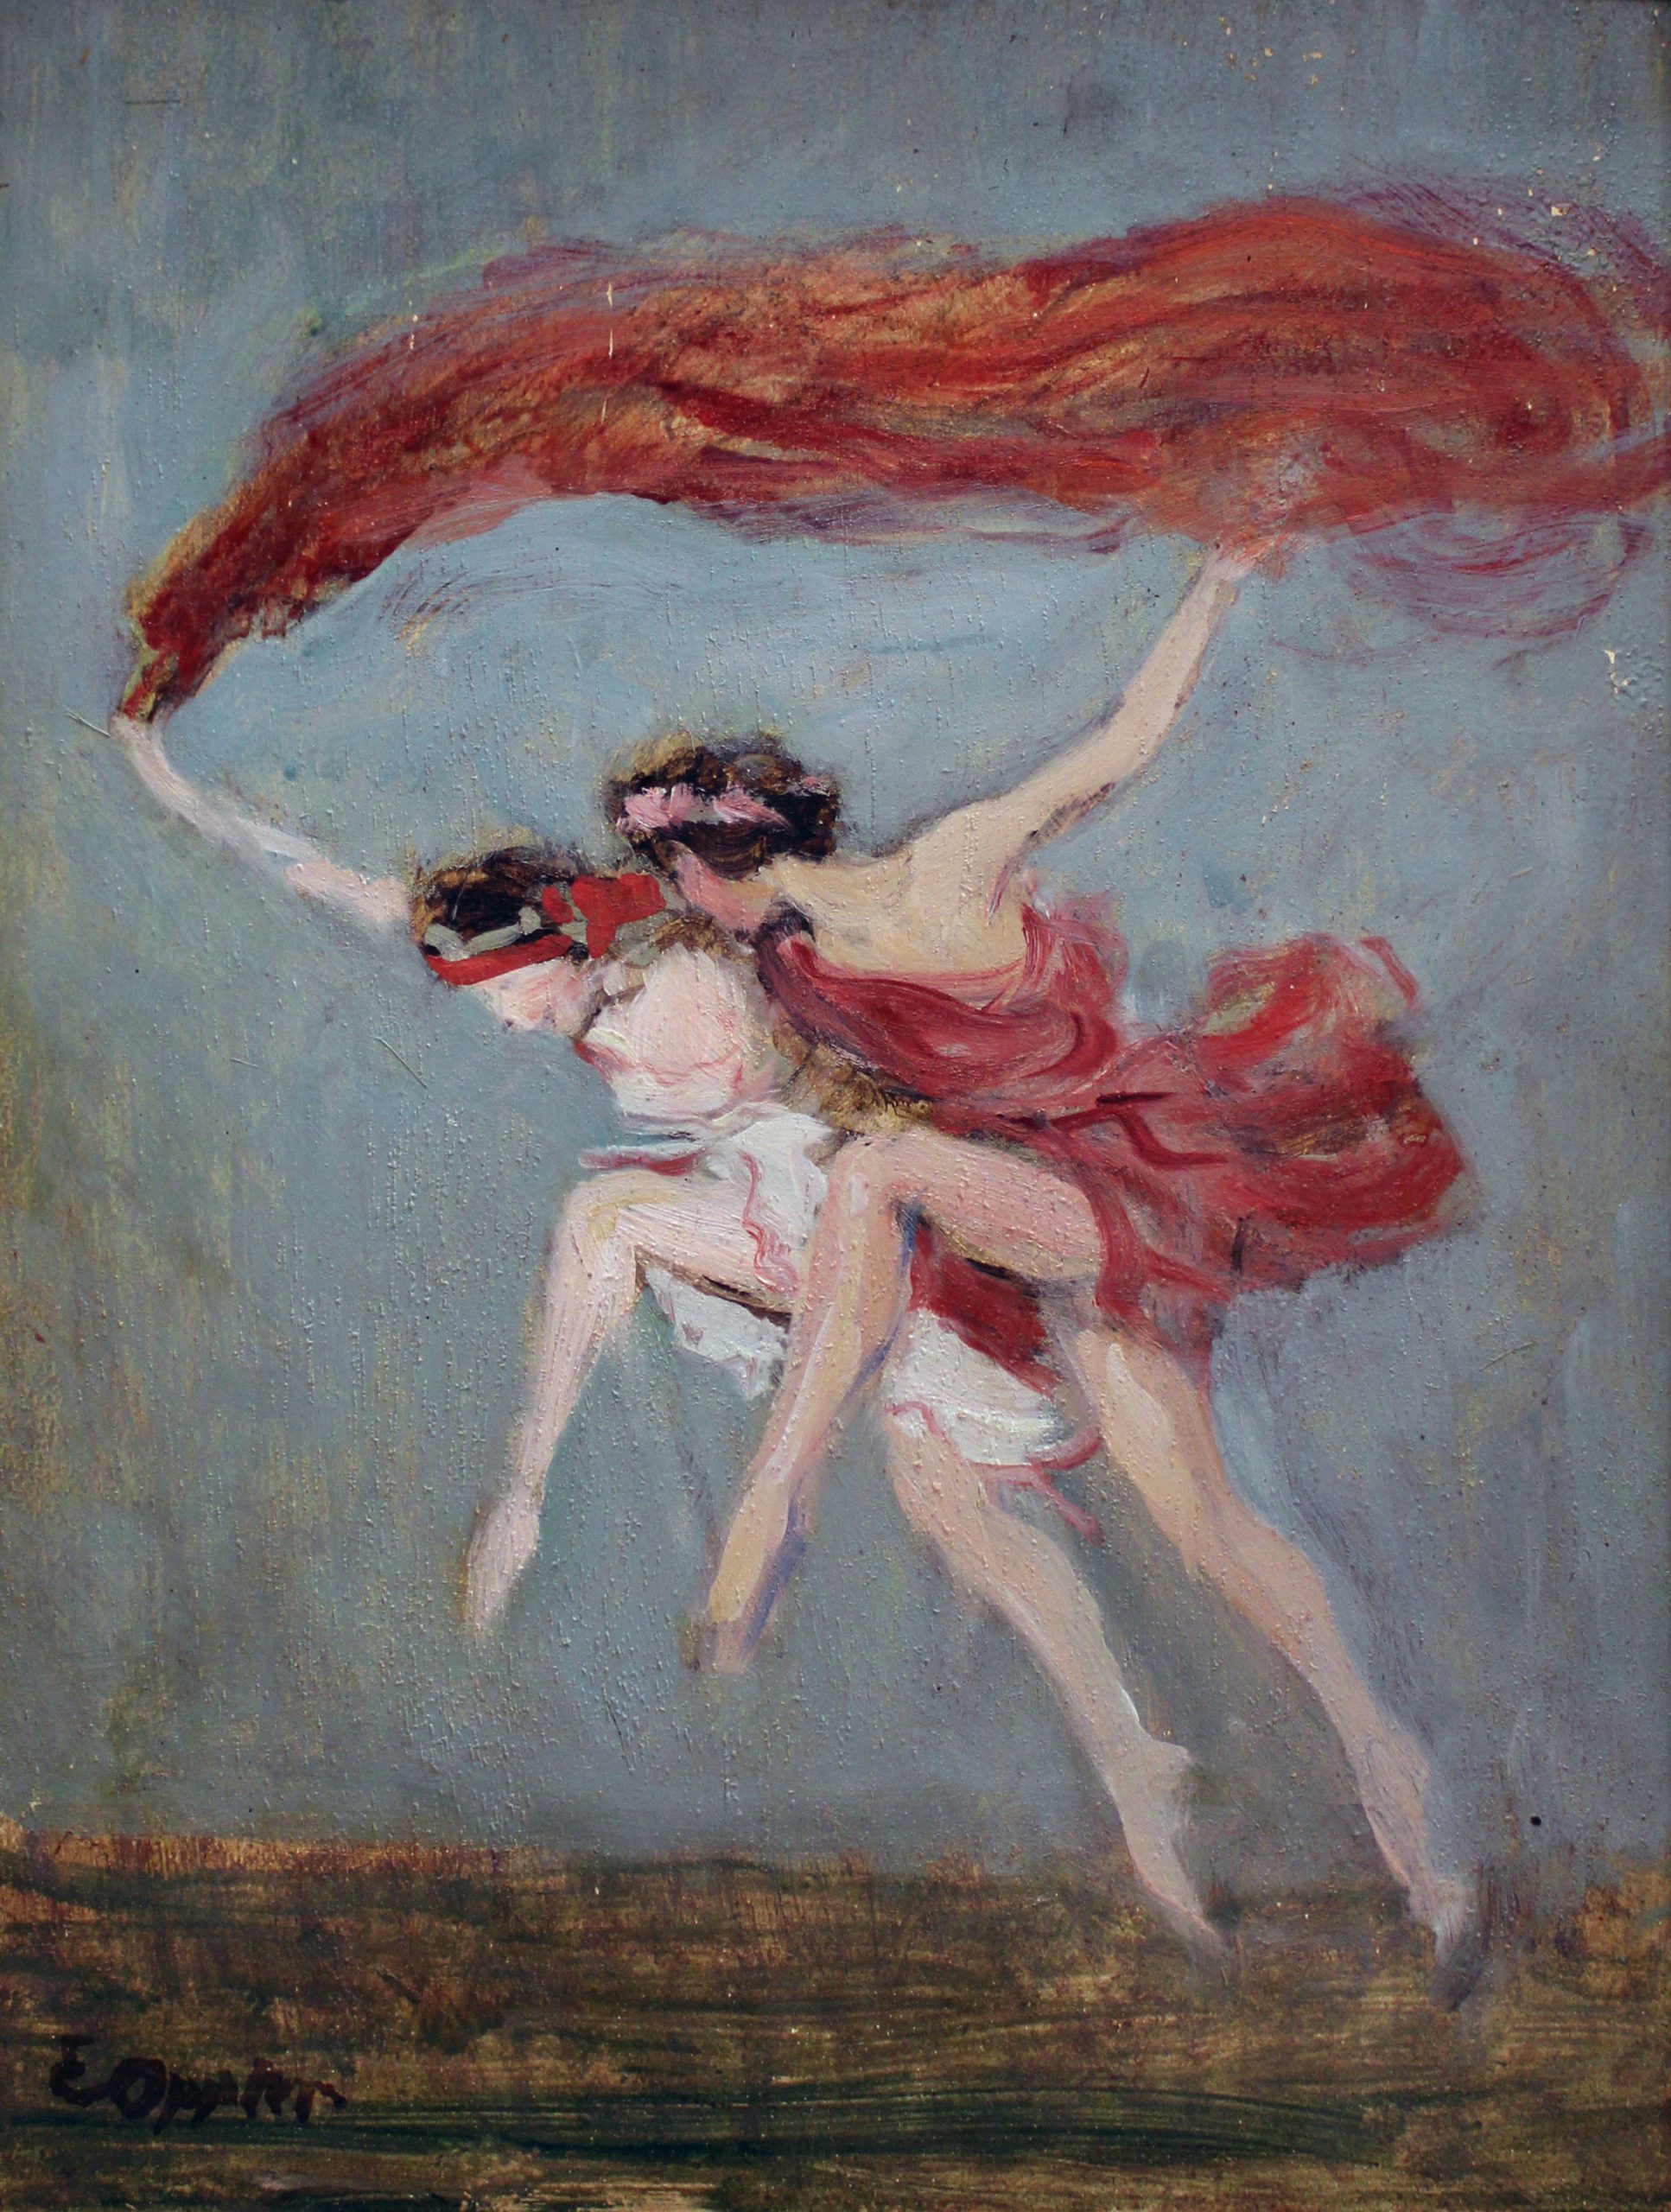 Depicting the Dancer